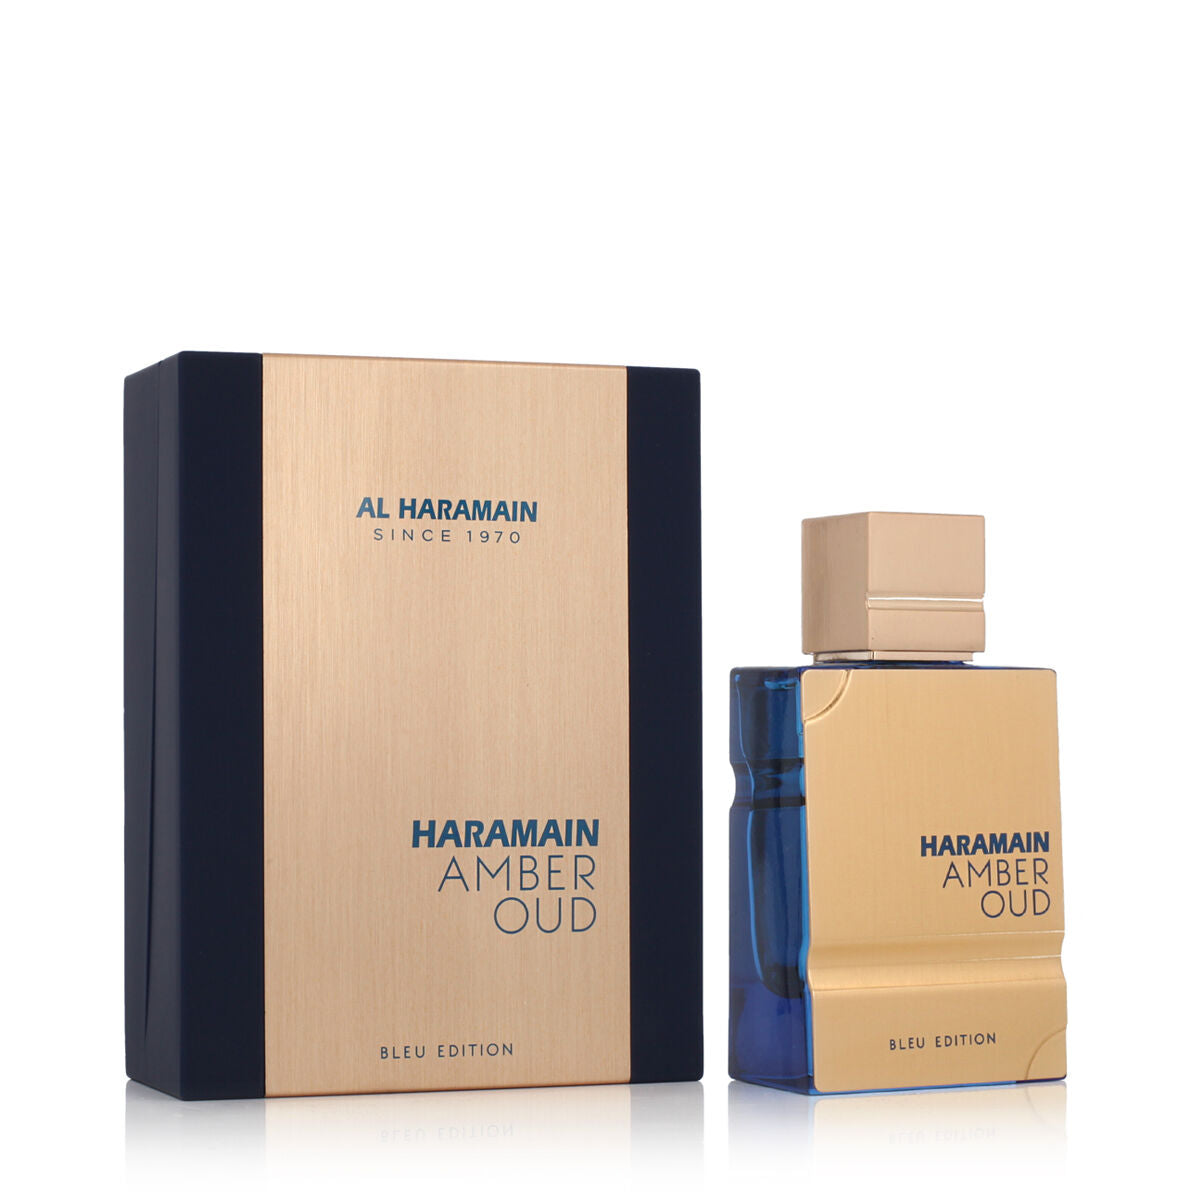  Al Haramain Amber Oud Blue Edition for Men Eau de Parfum  Spray, 2.0 Ounce : Beauty & Personal Care